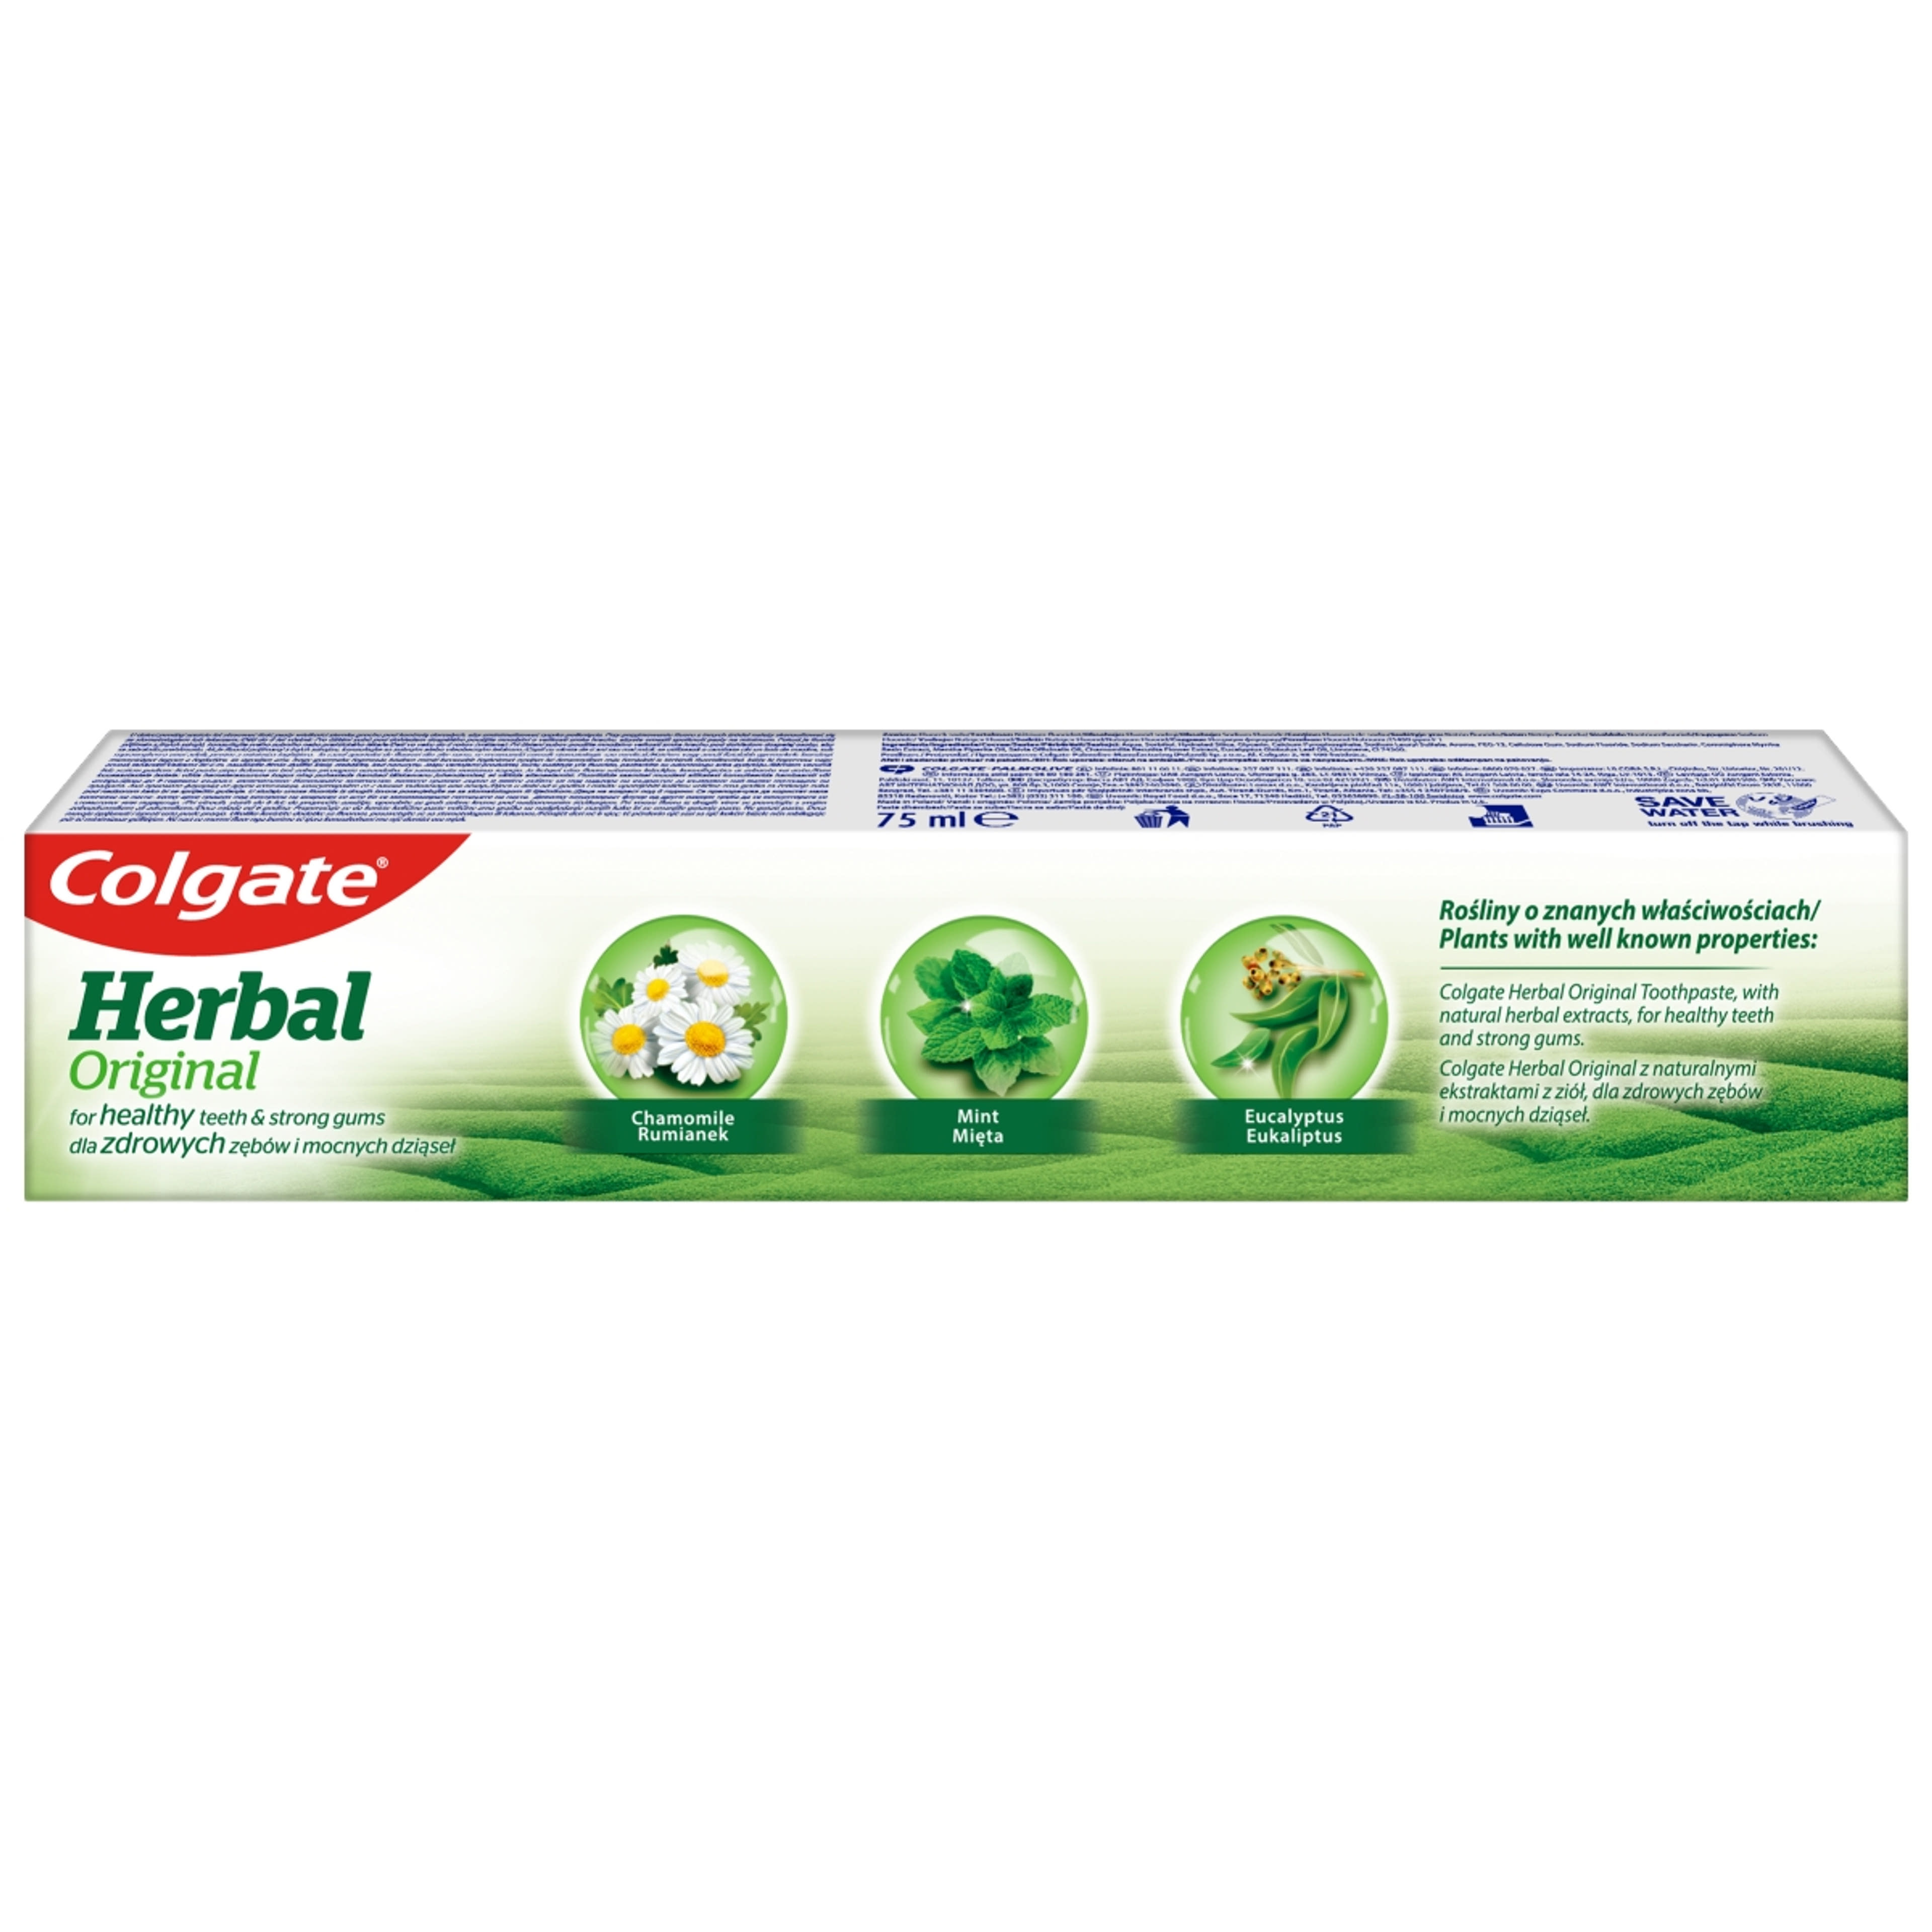 Colgate Herbal Original fogkrém - 75 ml-3